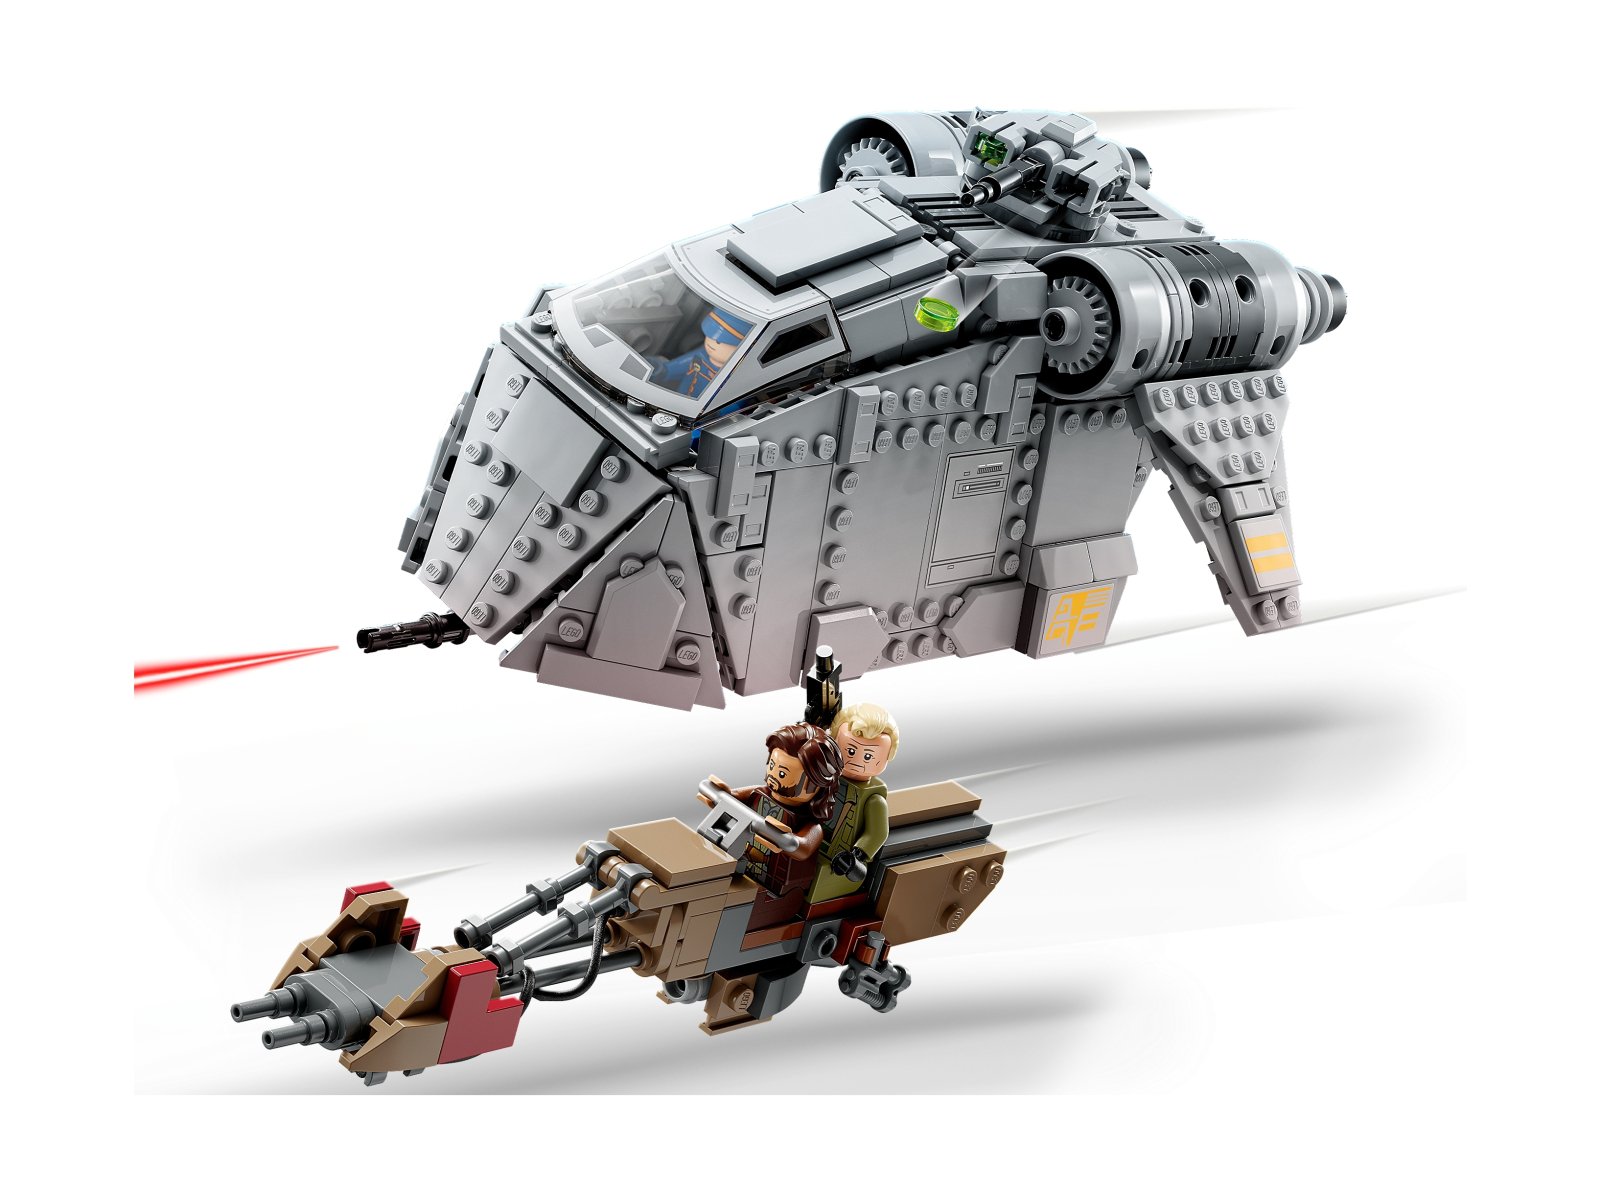 LEGO Star Wars 75338 Zasadzka na Ferrix™